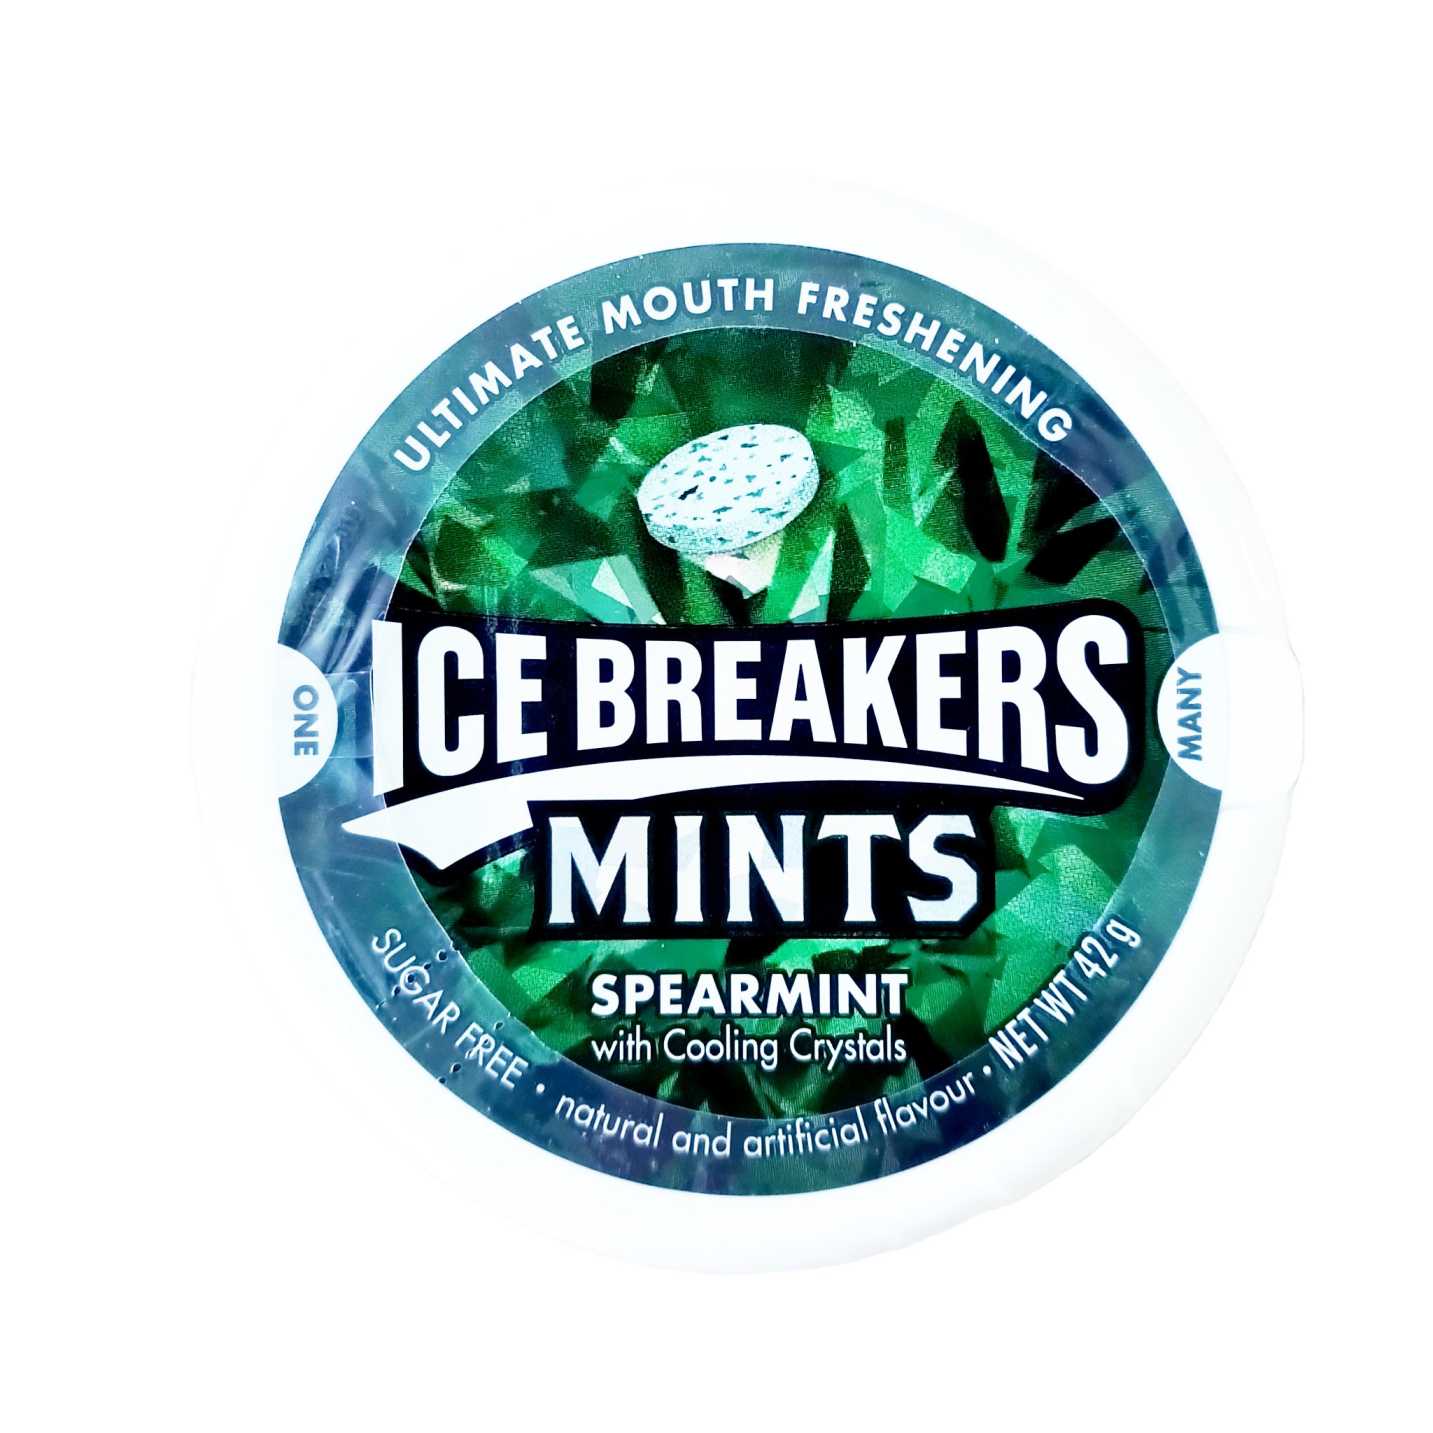 Ice Breakers Sours Mints - אייס ברייקרס מנטה - טעימים